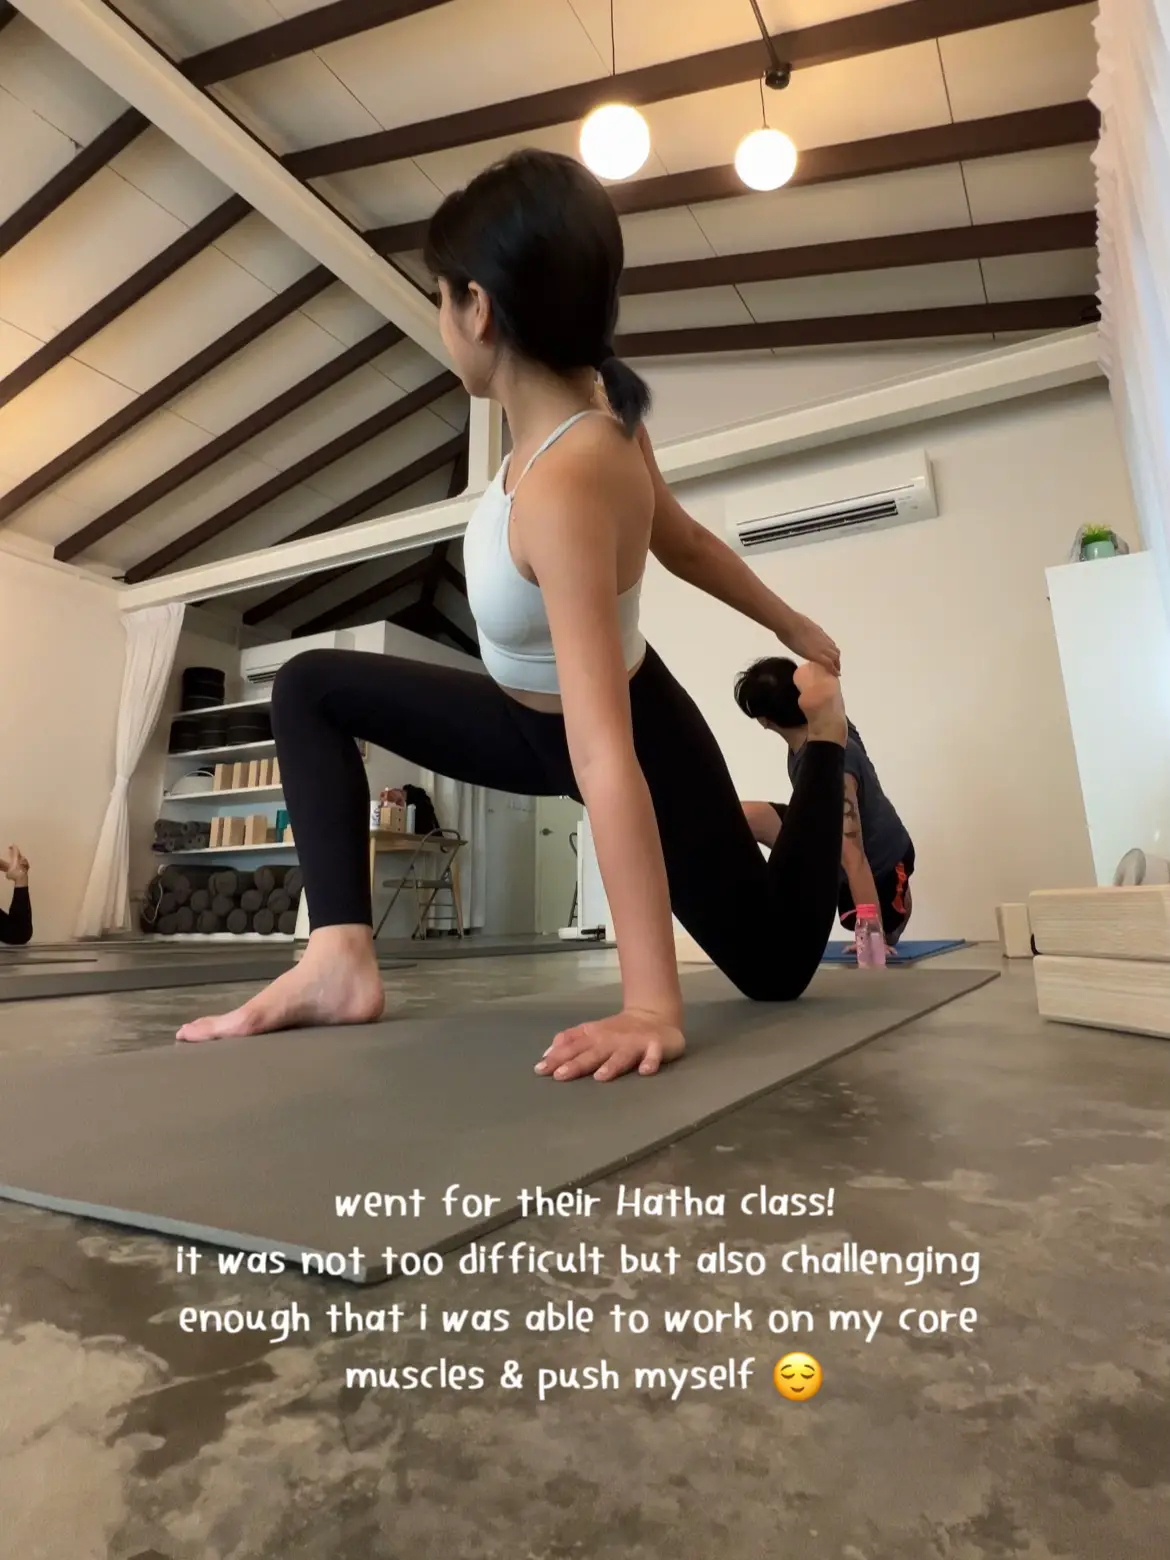 $10 HATHA YOGA CLASS 🤩 + benefits of yoga 🧘‍♀️'s images(1)